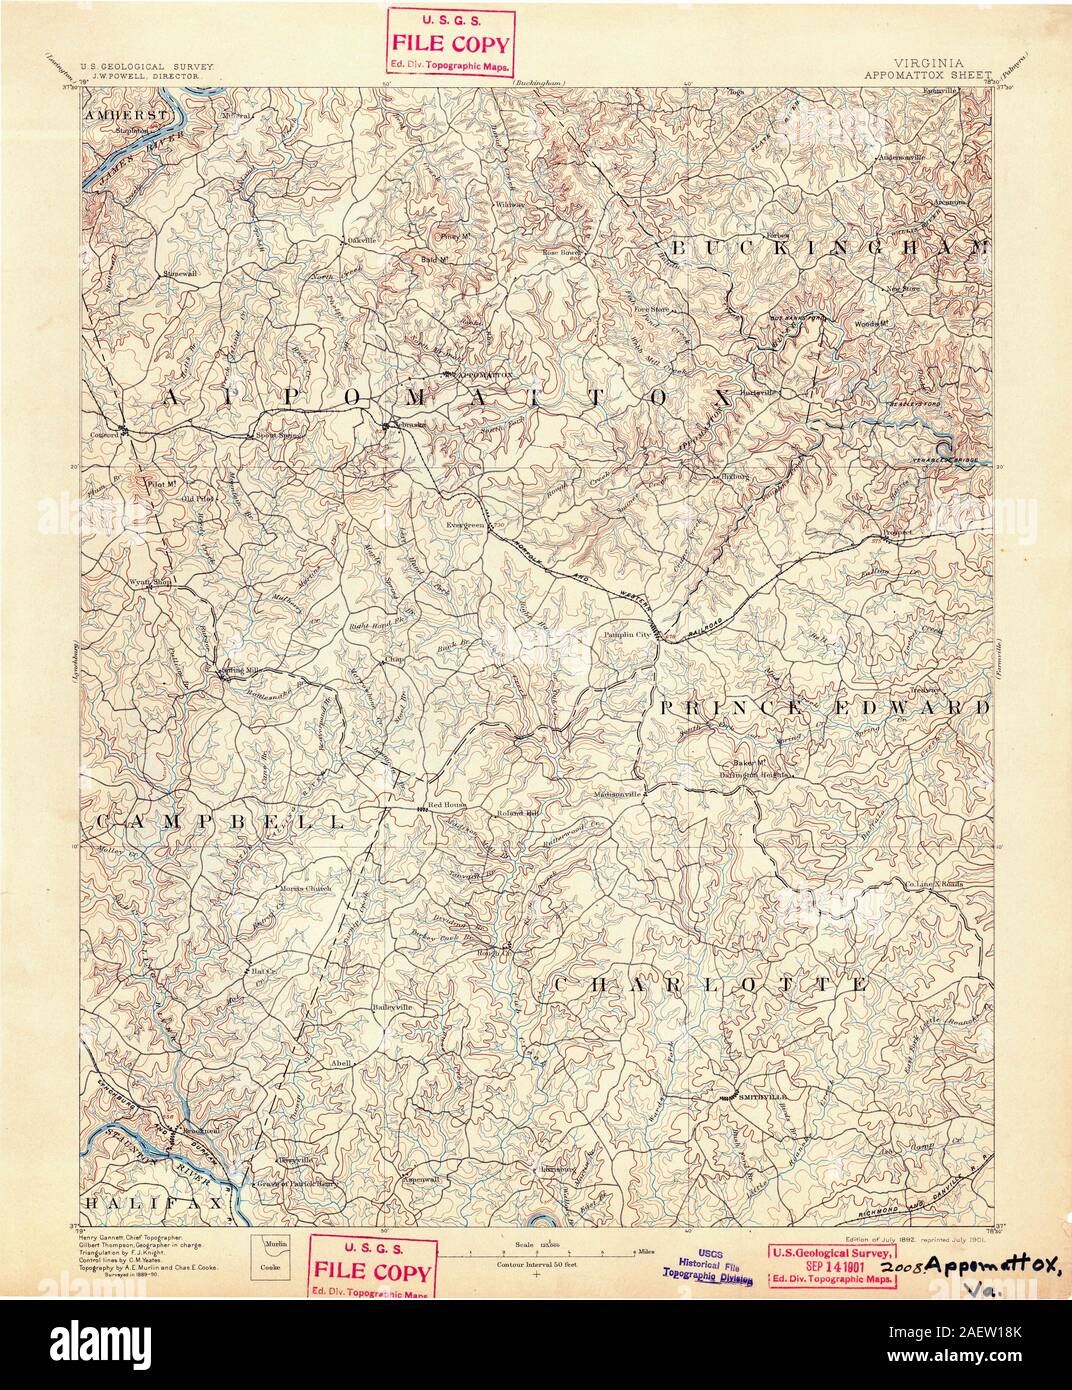 VA Appomattox 188847 1892 125000 Stock Photo